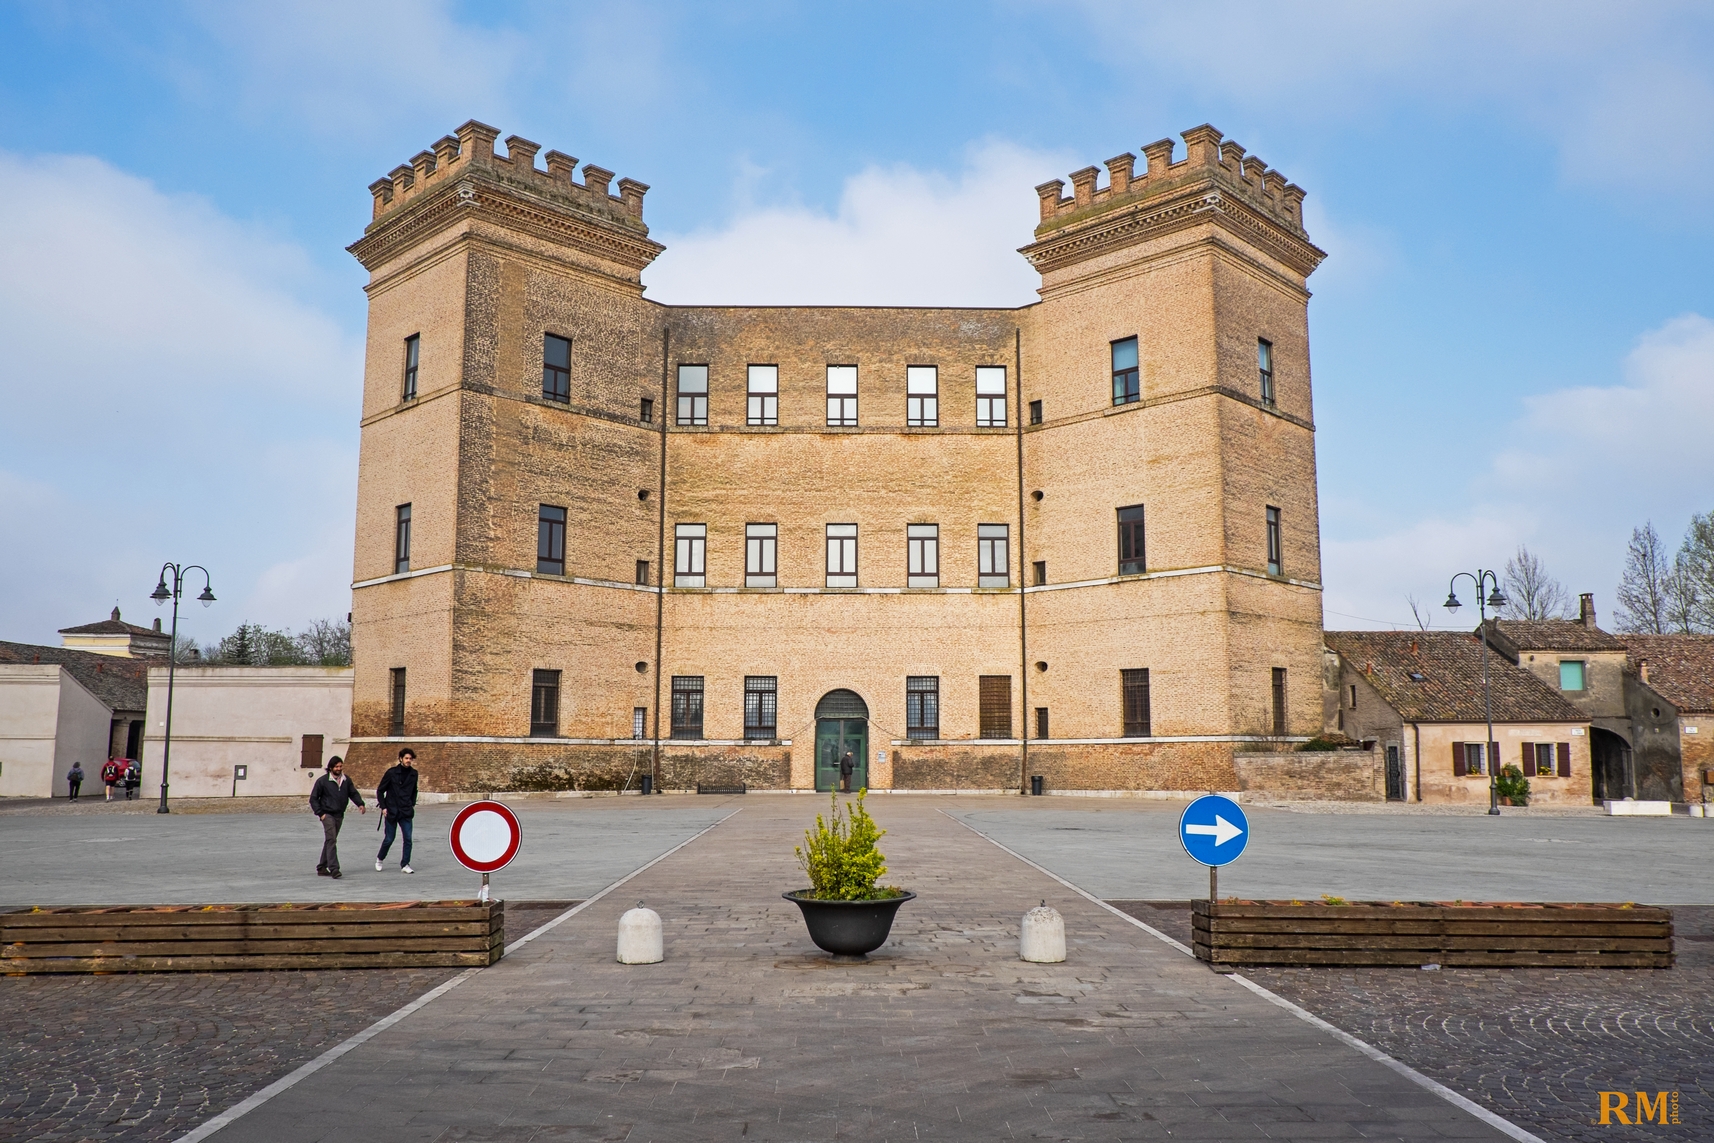 Castello Mesola